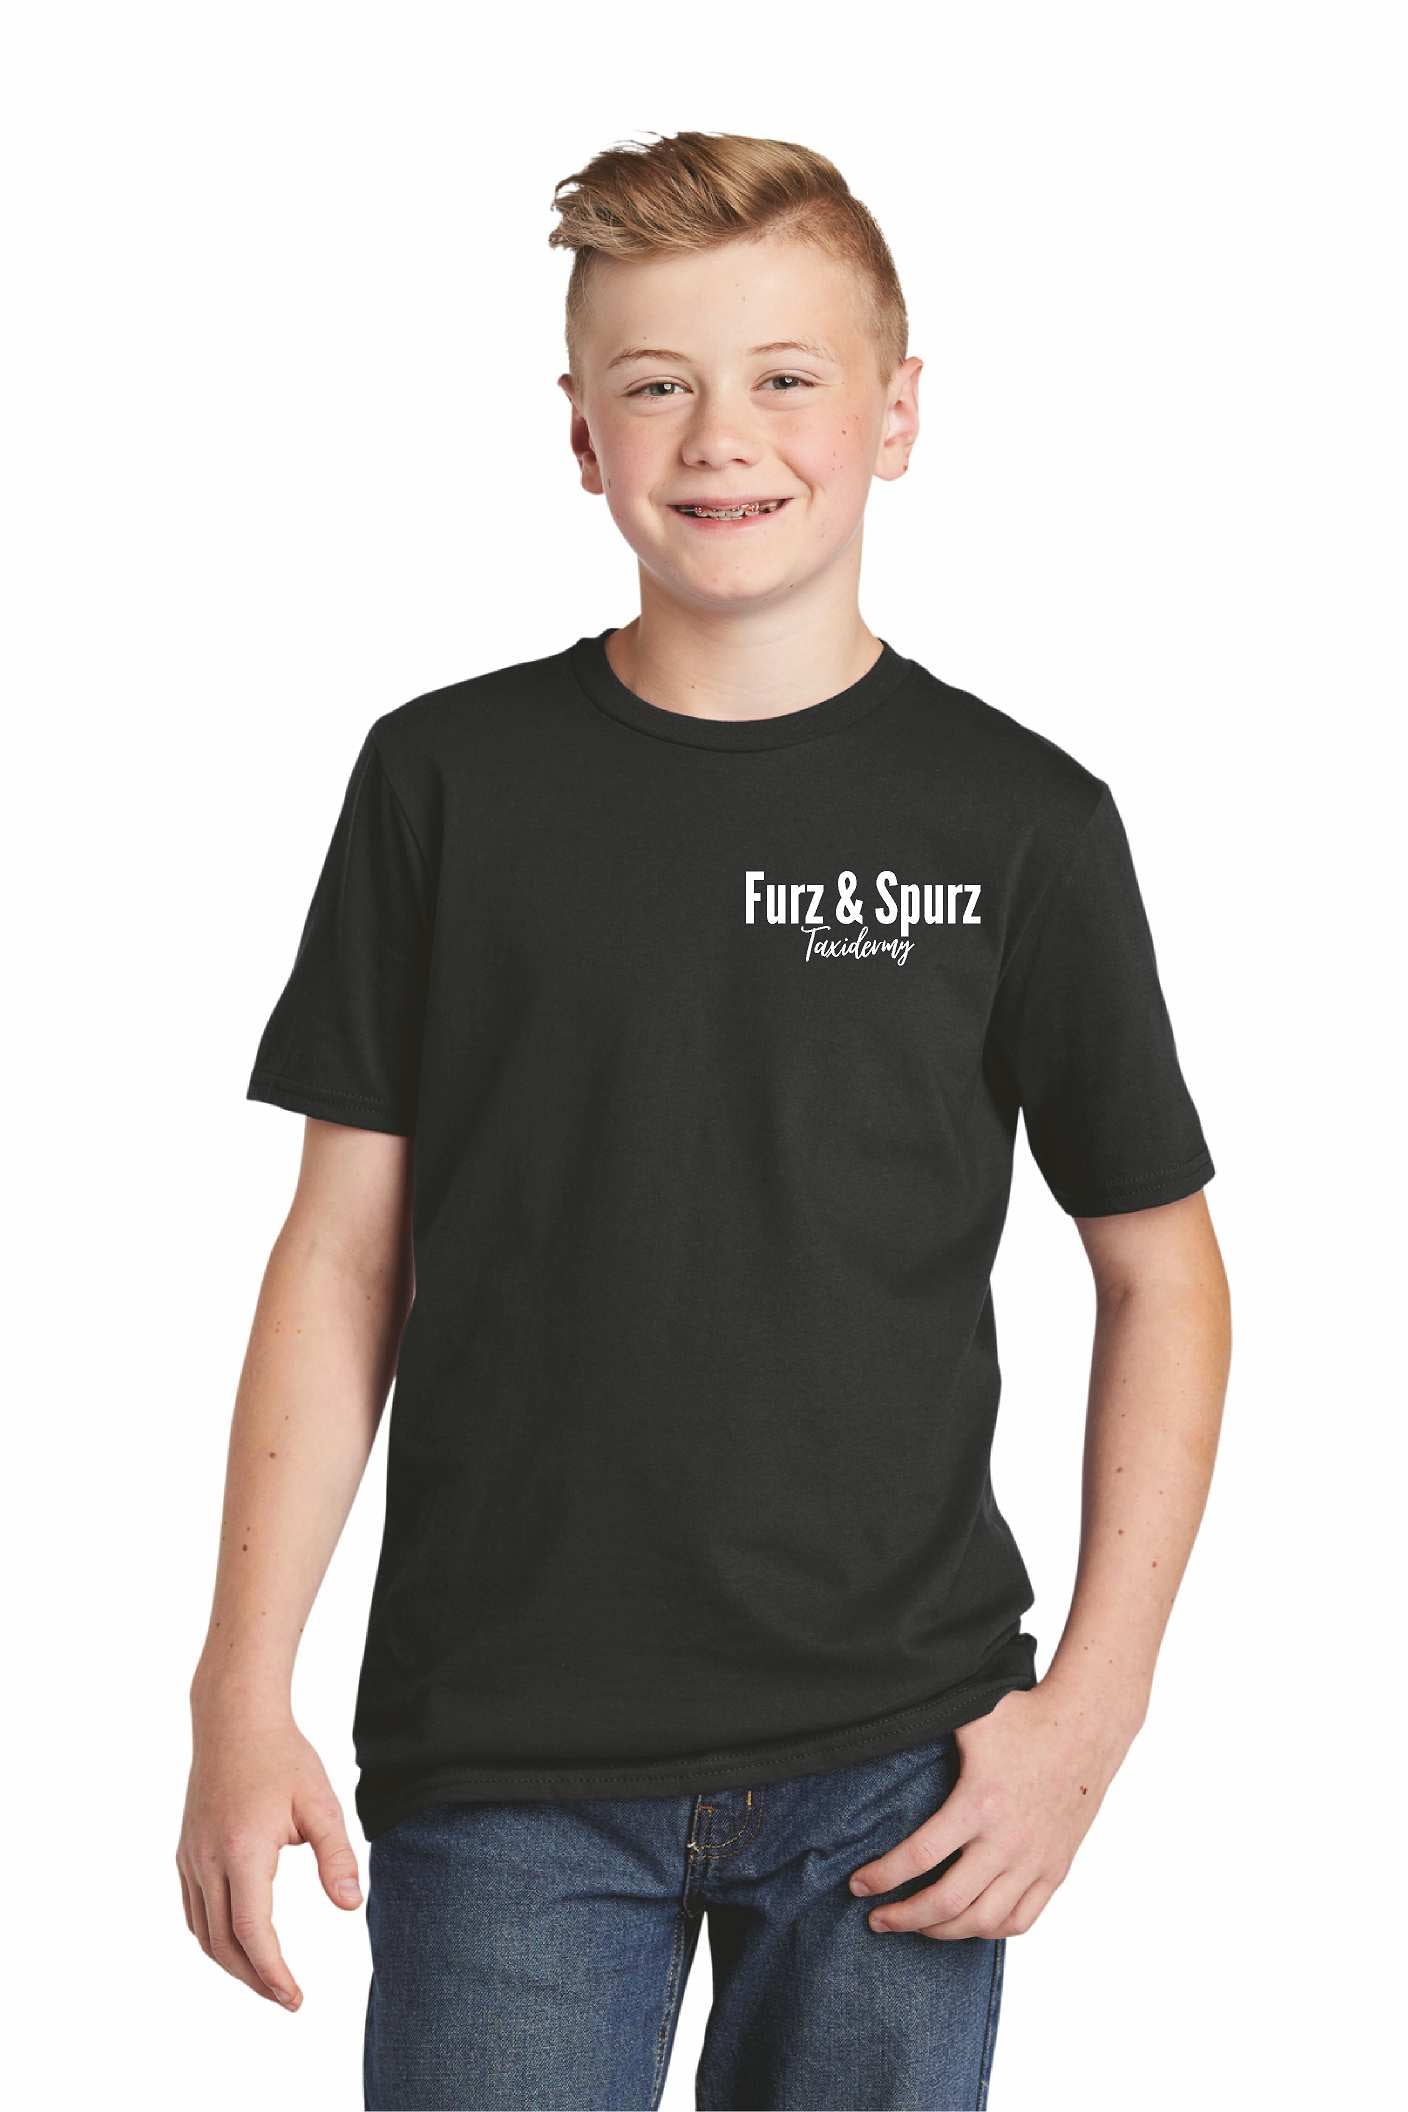 Furz and Spurz Youth Unisex District Tshirt DT6000Y